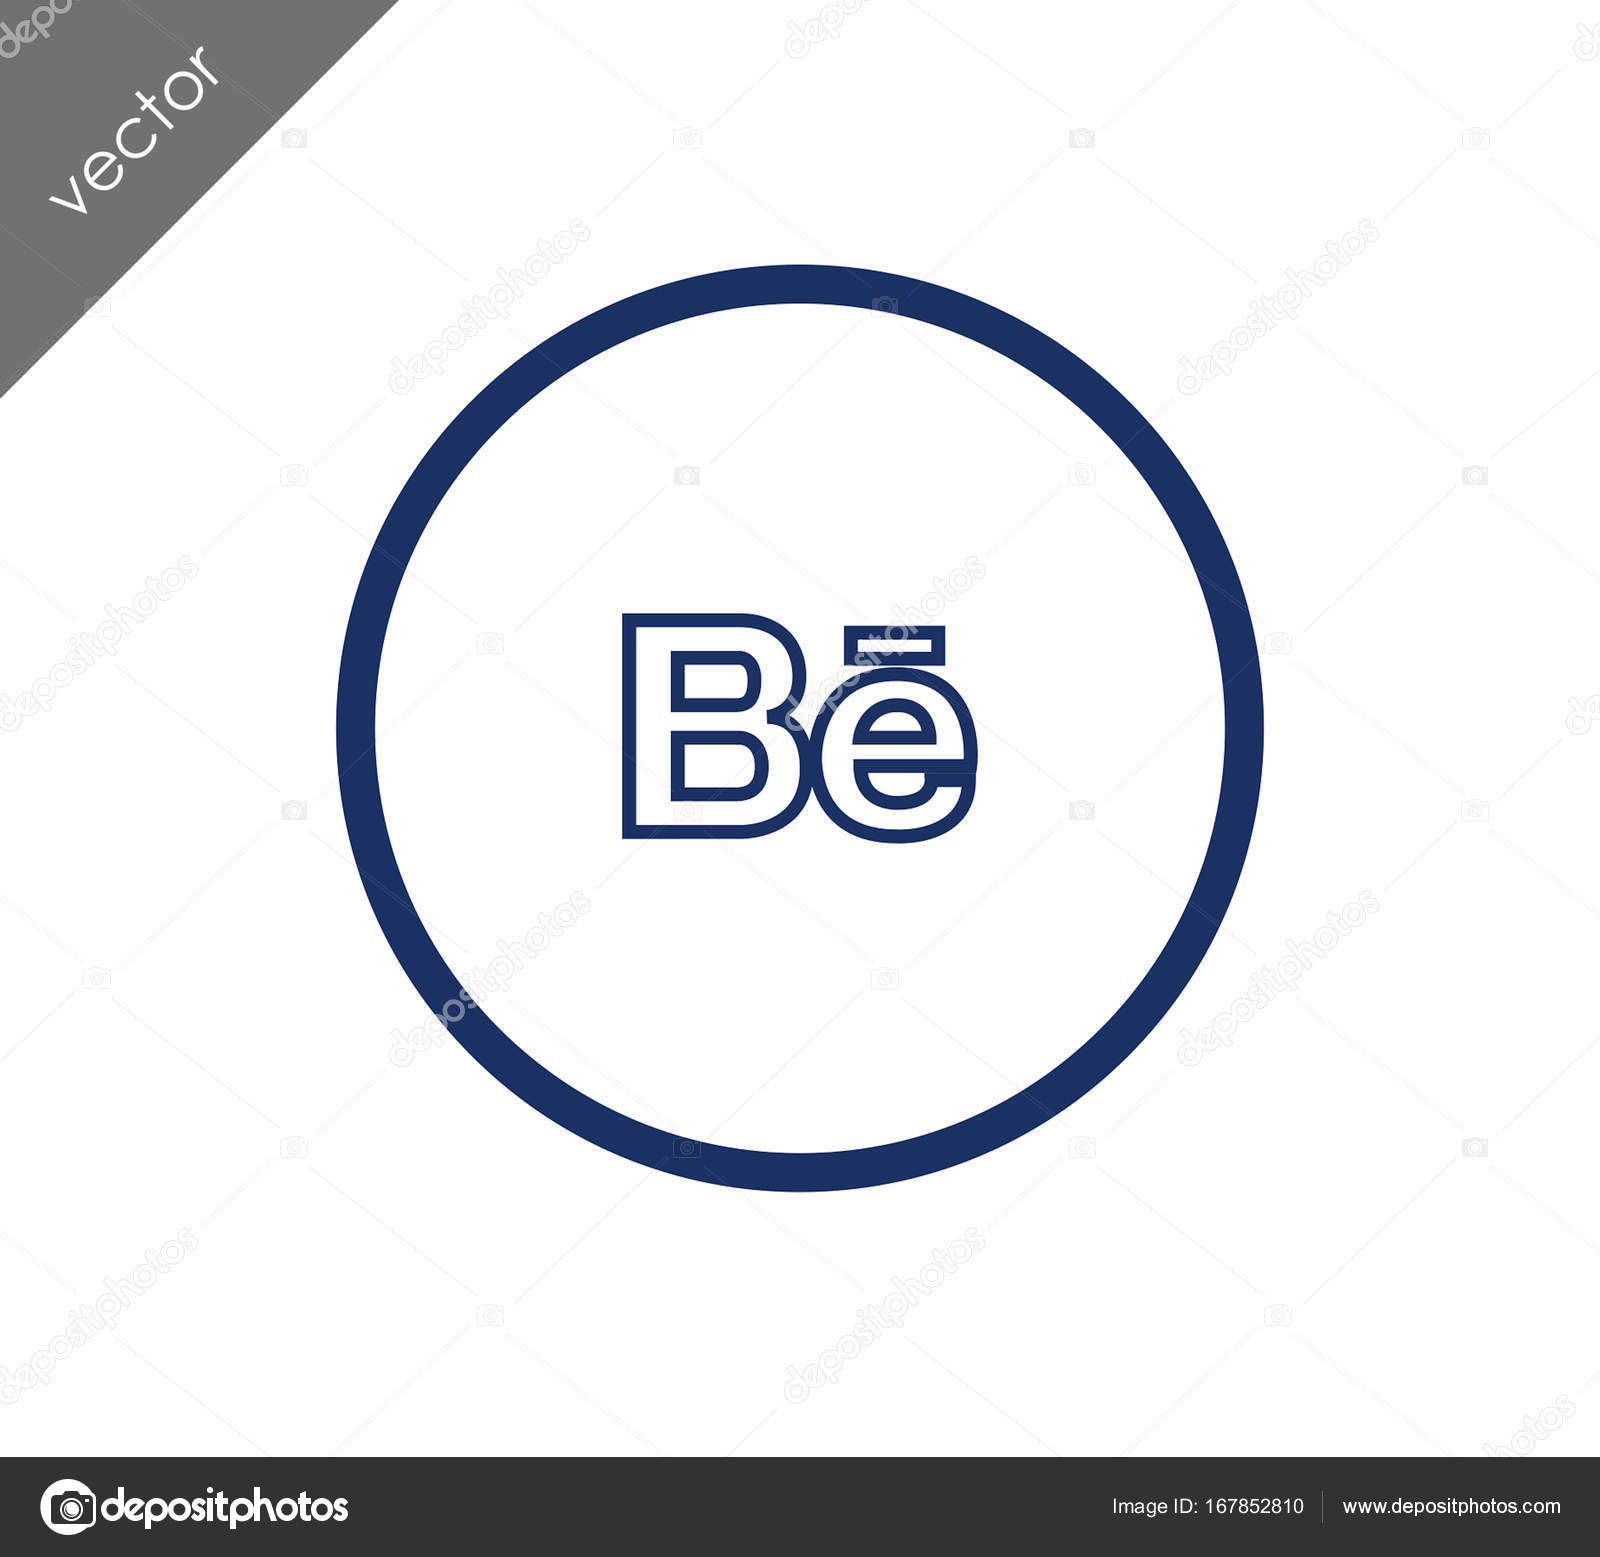 V logo icon on Behance